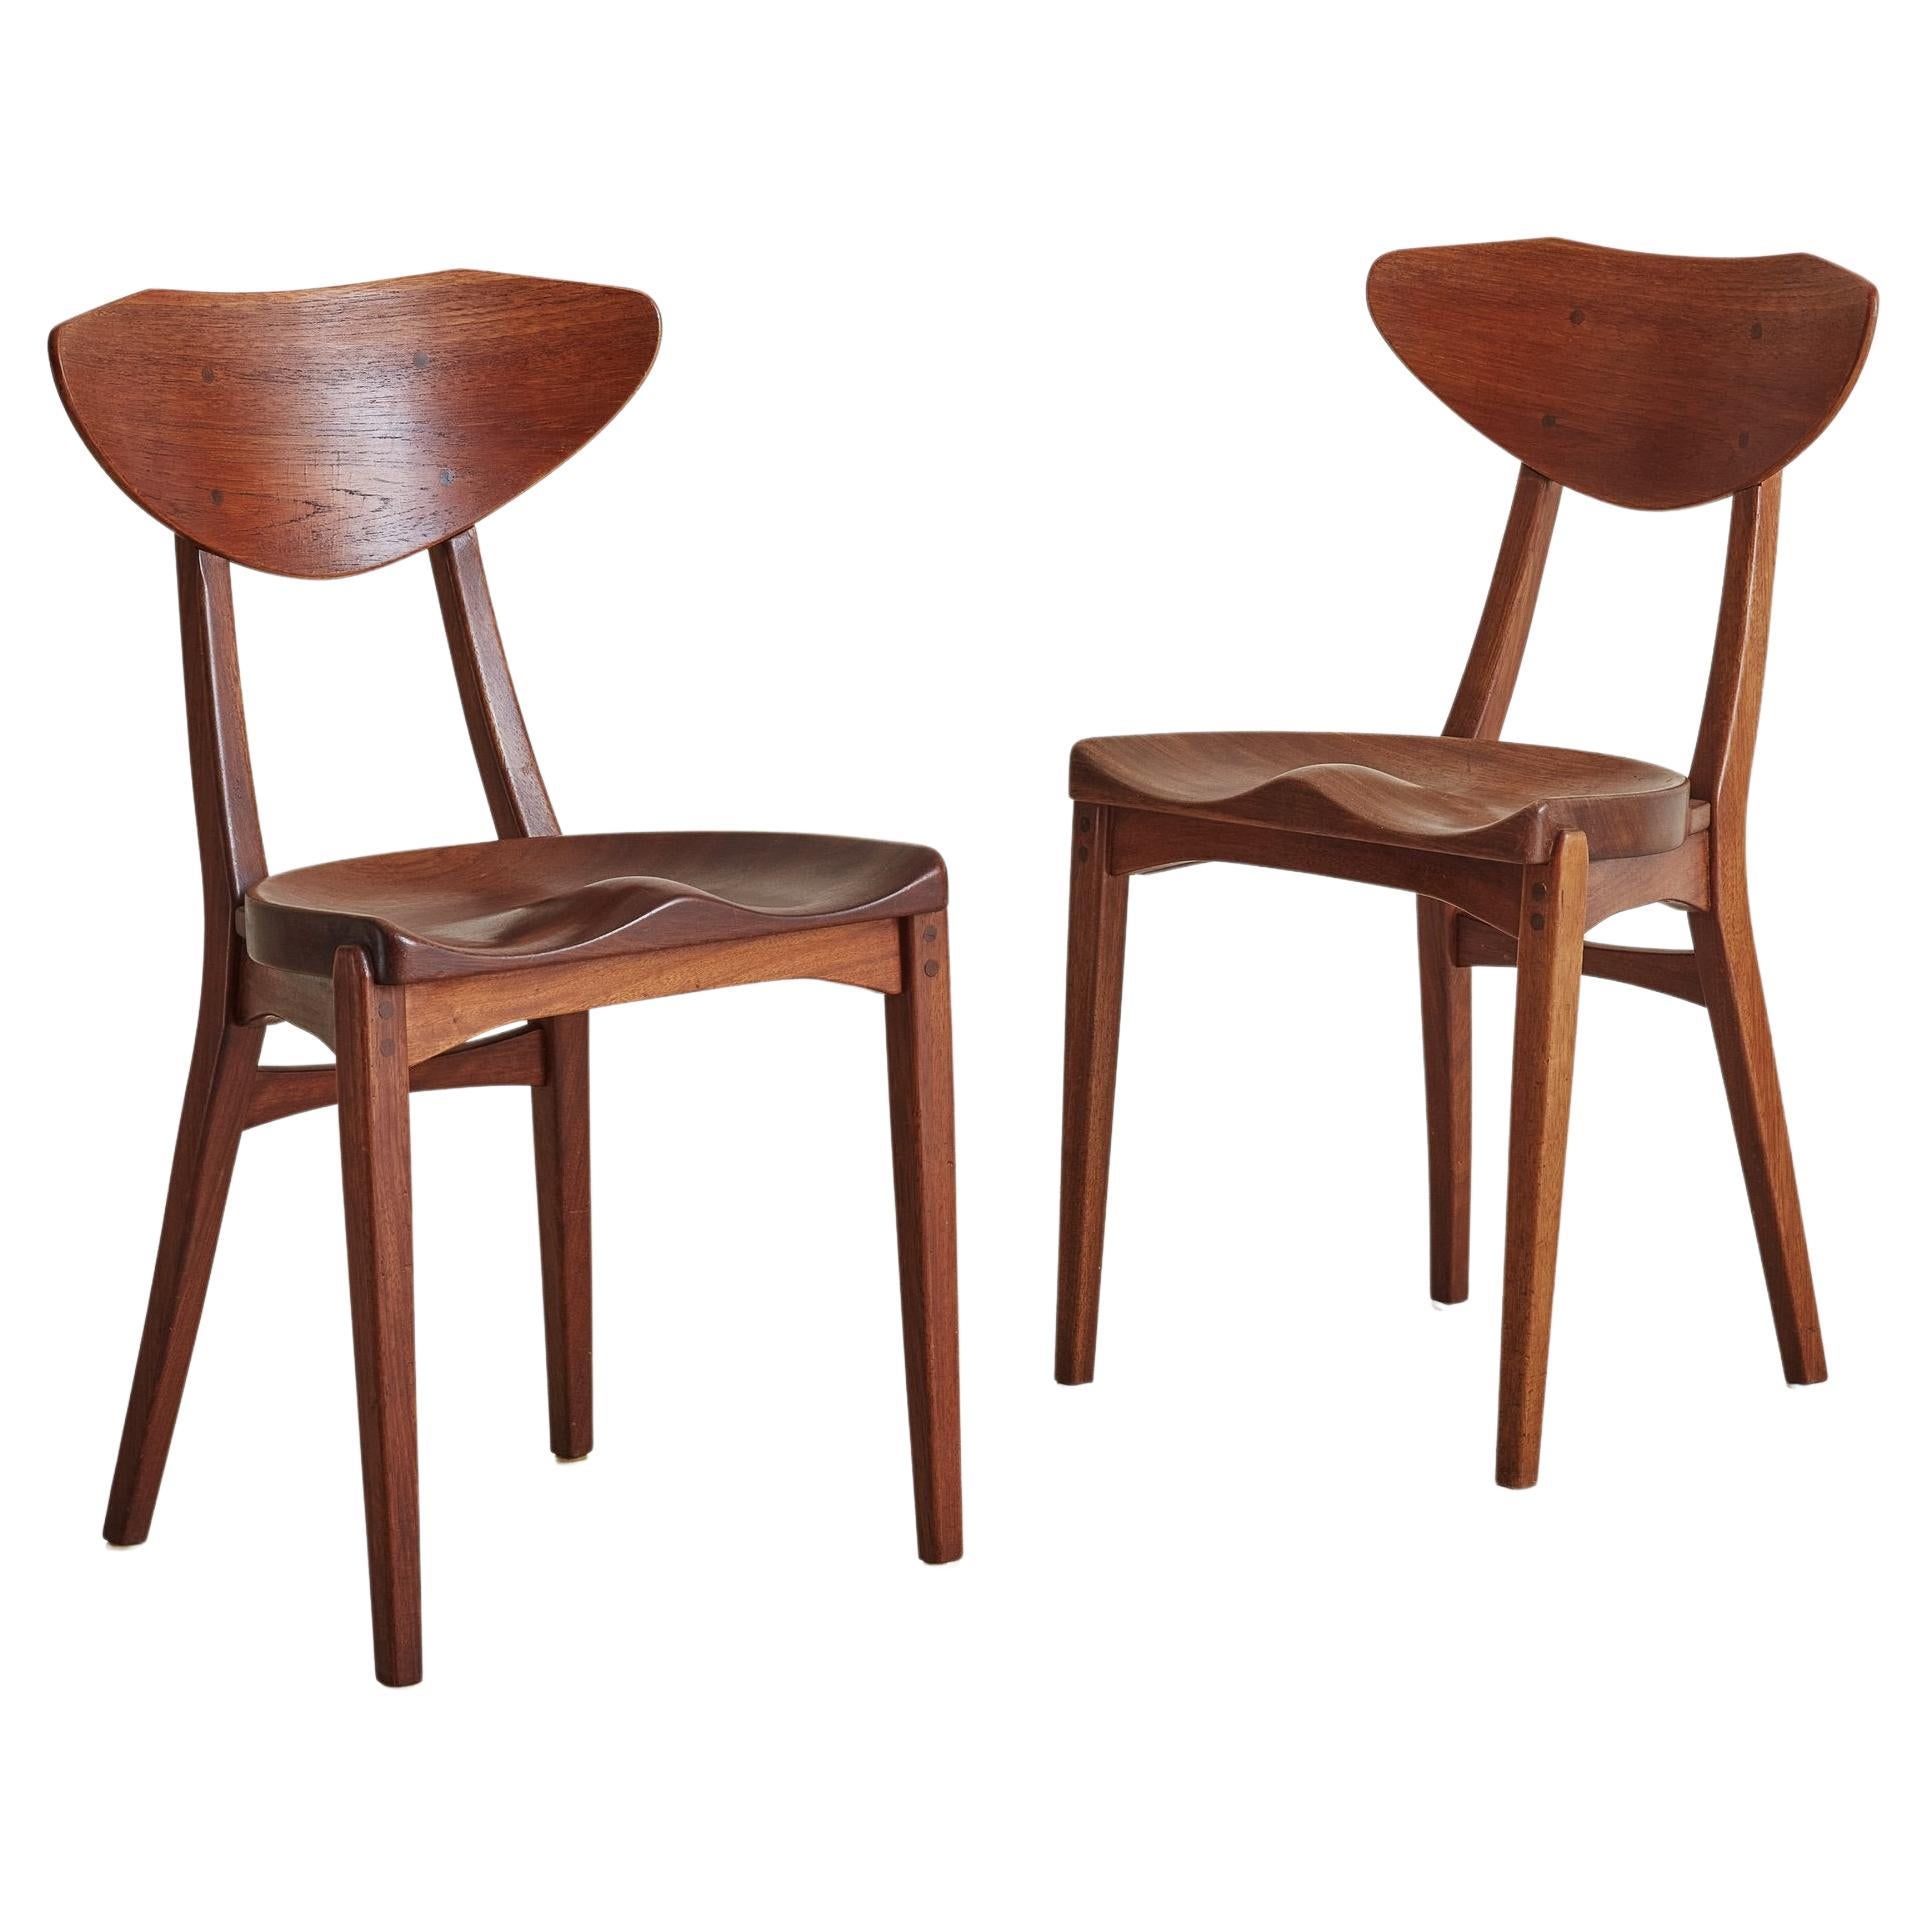 Pair of Mahogany Dining Chairs by Richard Jensen & Kjærulff Rasmussen, Denmark For Sale